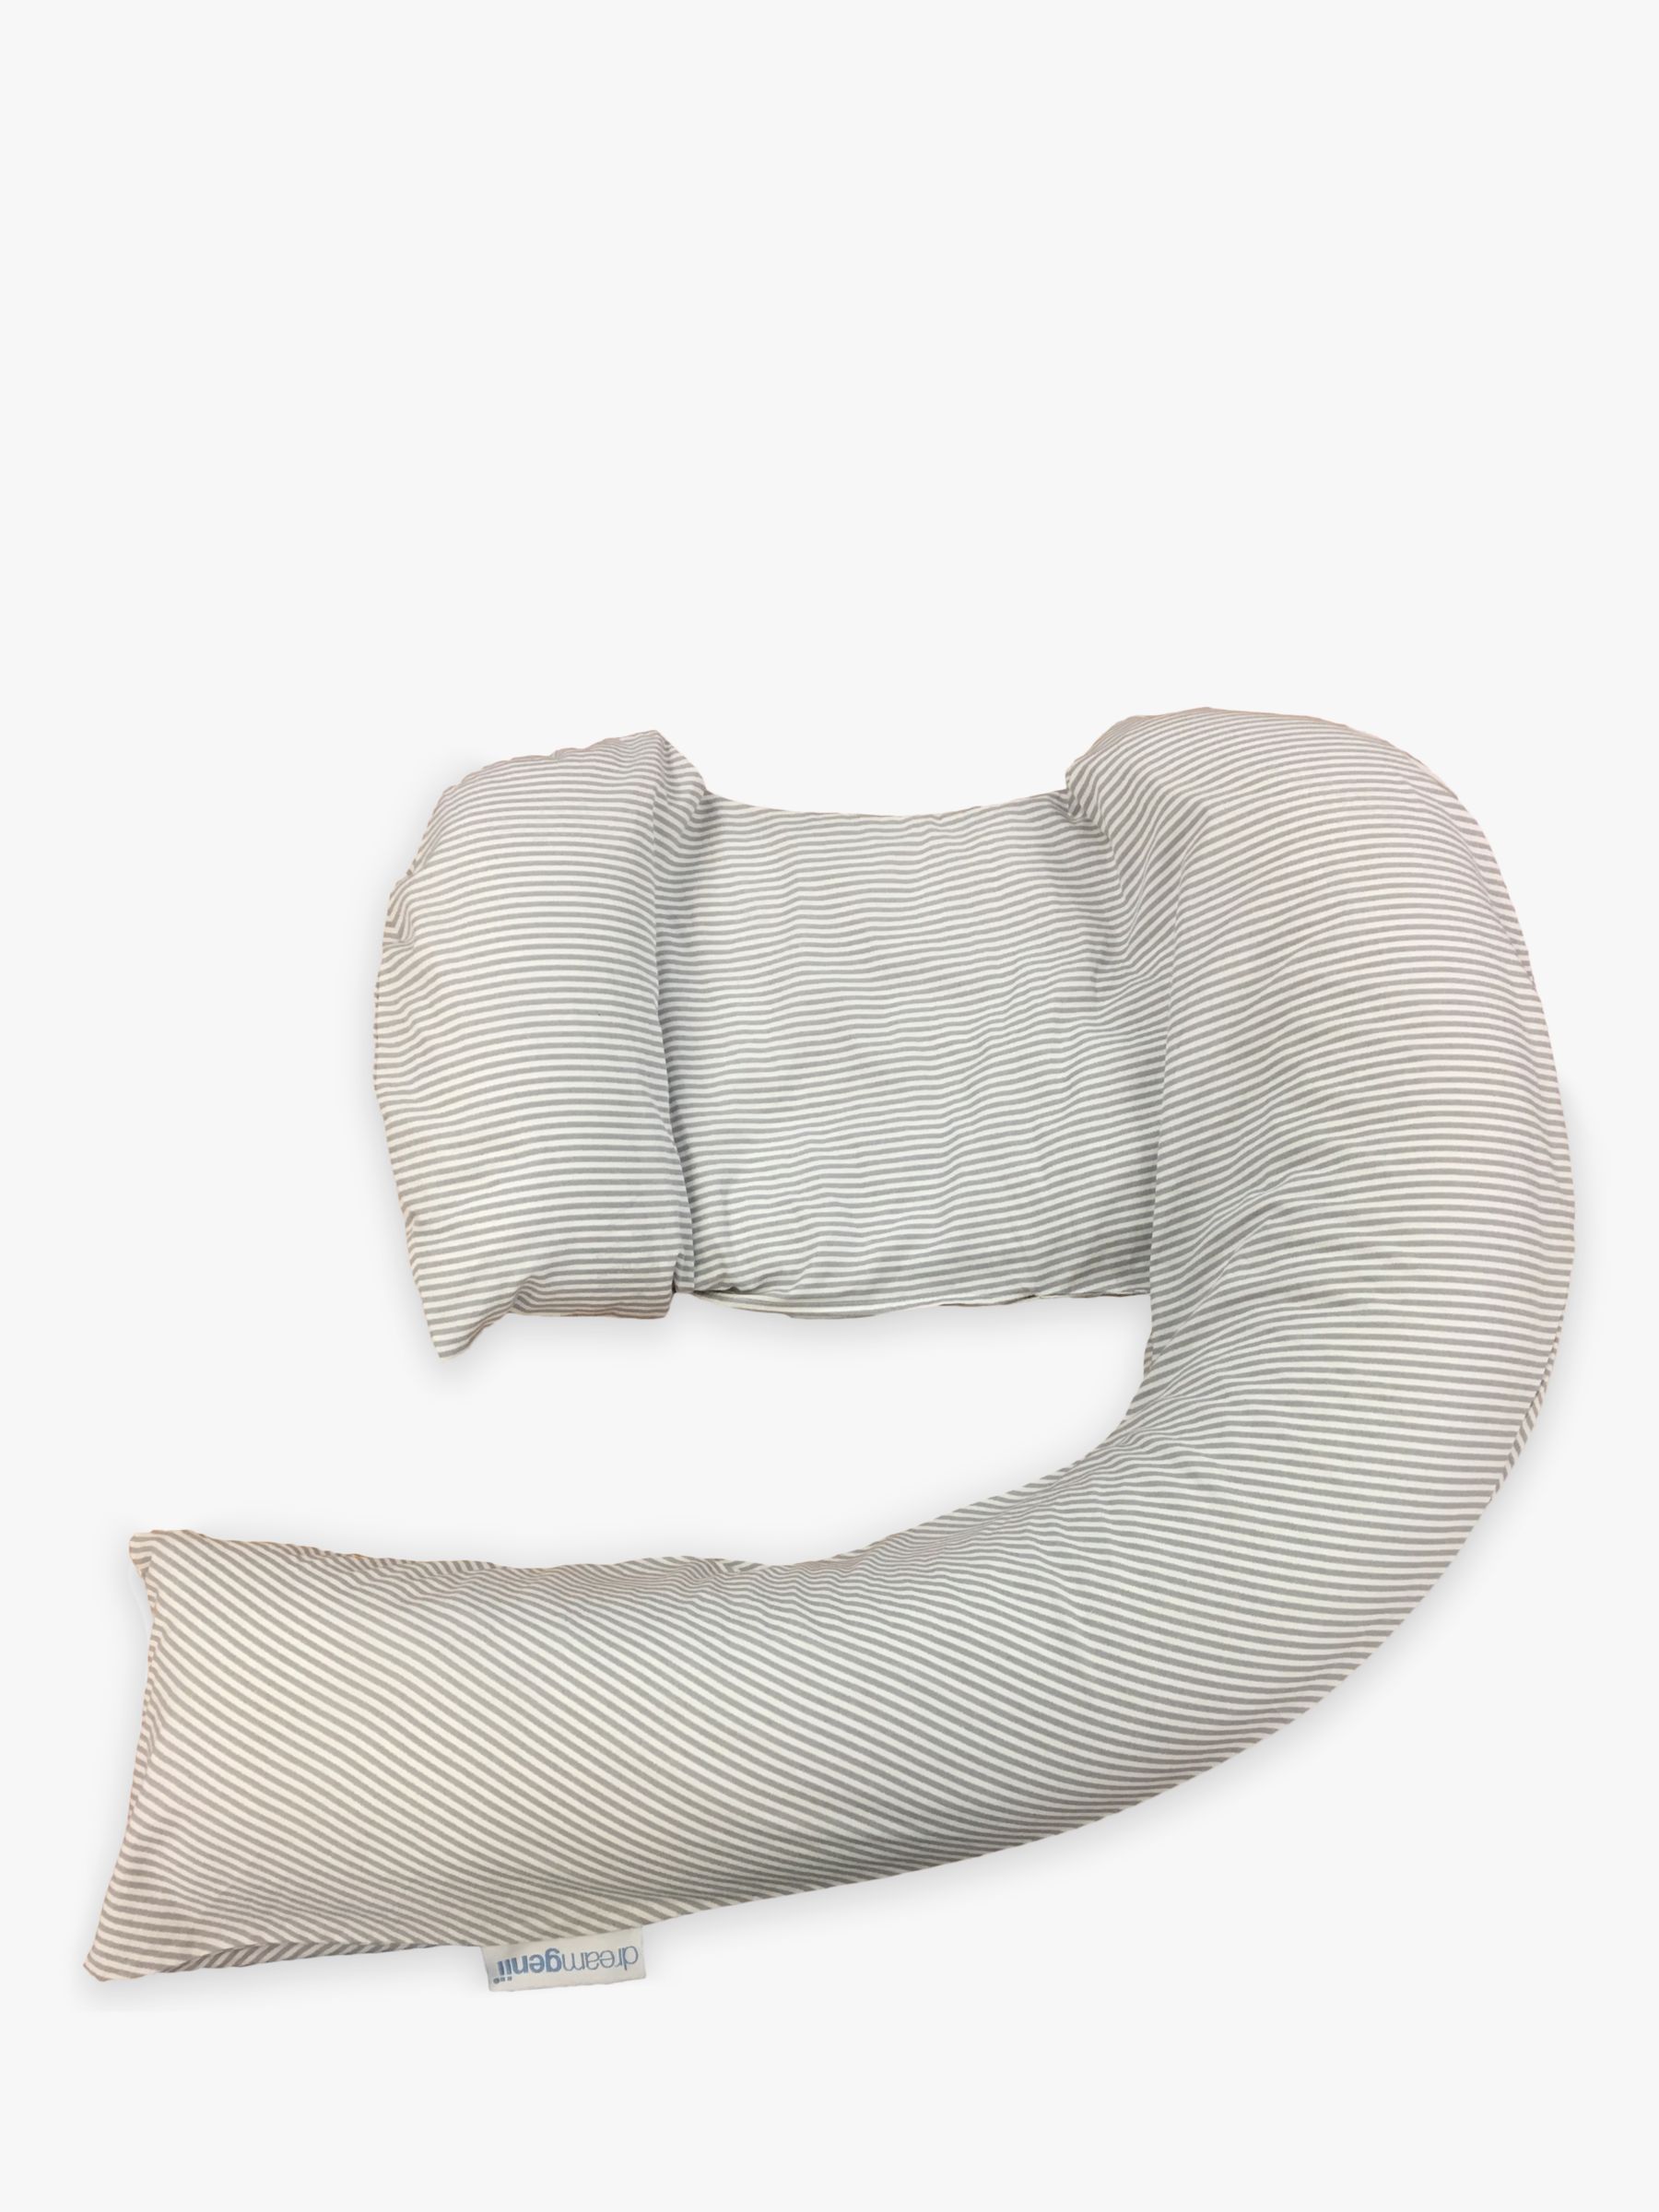 Image of Dreamgenii Stripe Maternity and Nursing Pillow Grey